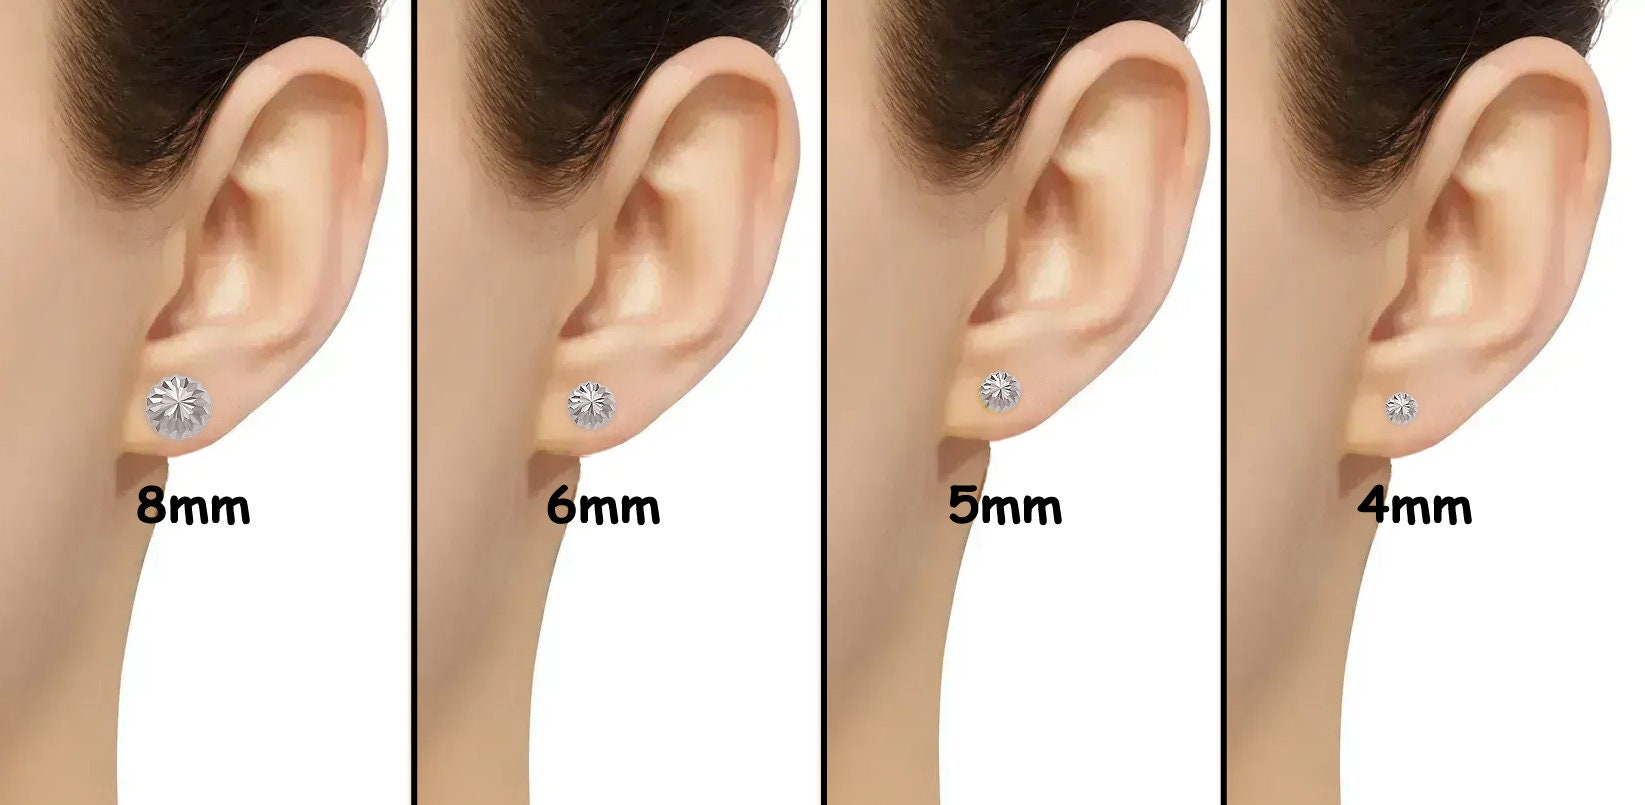 10K White Gold Stud Earrings, Diamond Cut Flat Back Ball Studs 4mm